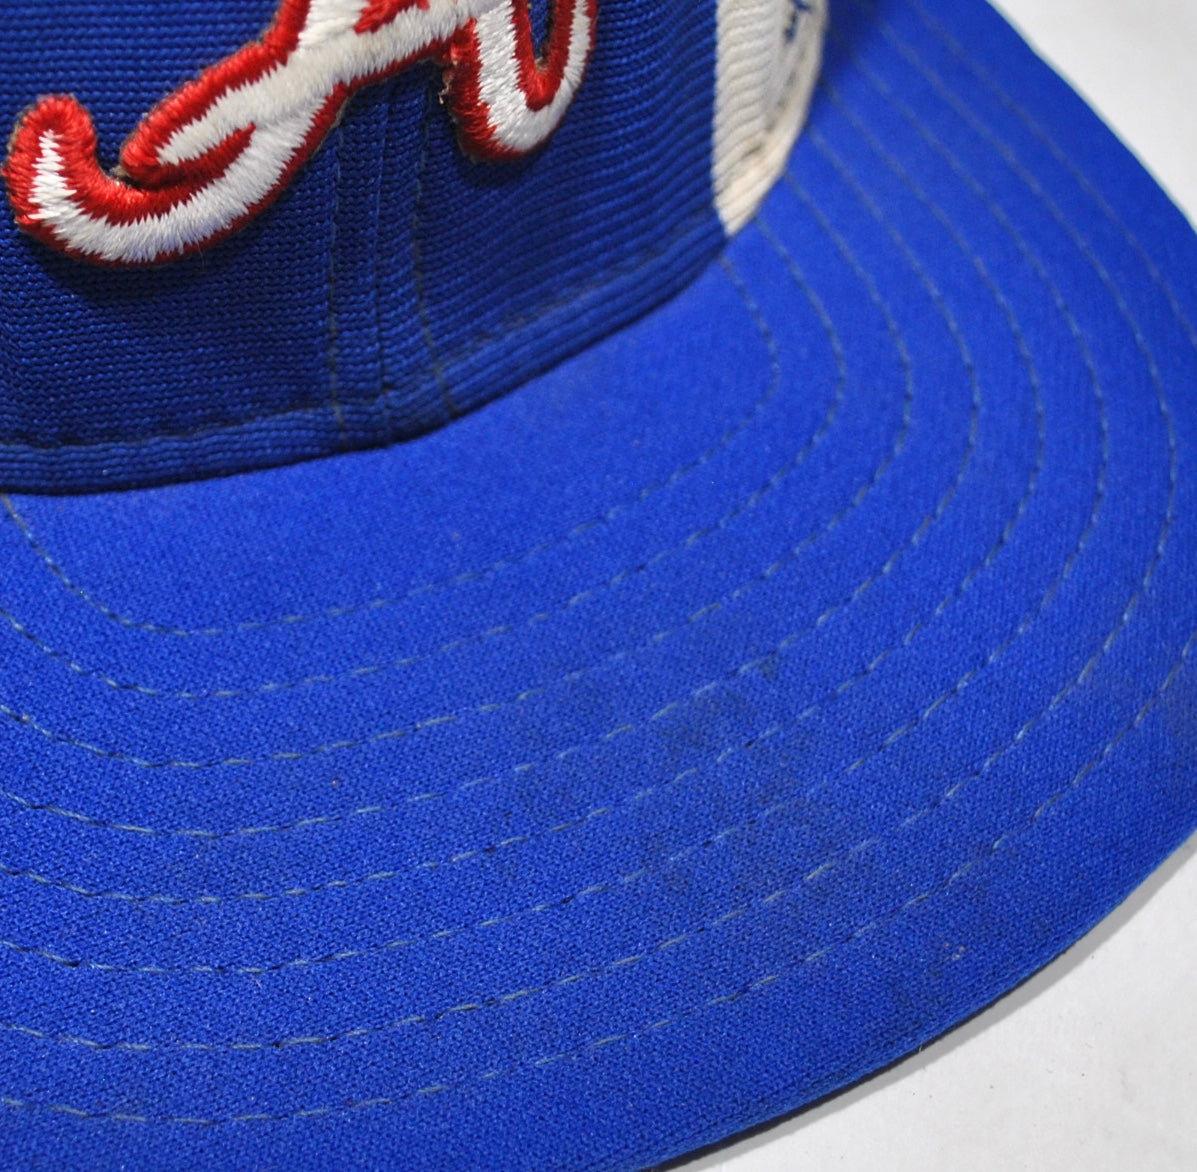 Vintage Atlanta Braves Snapback Hat